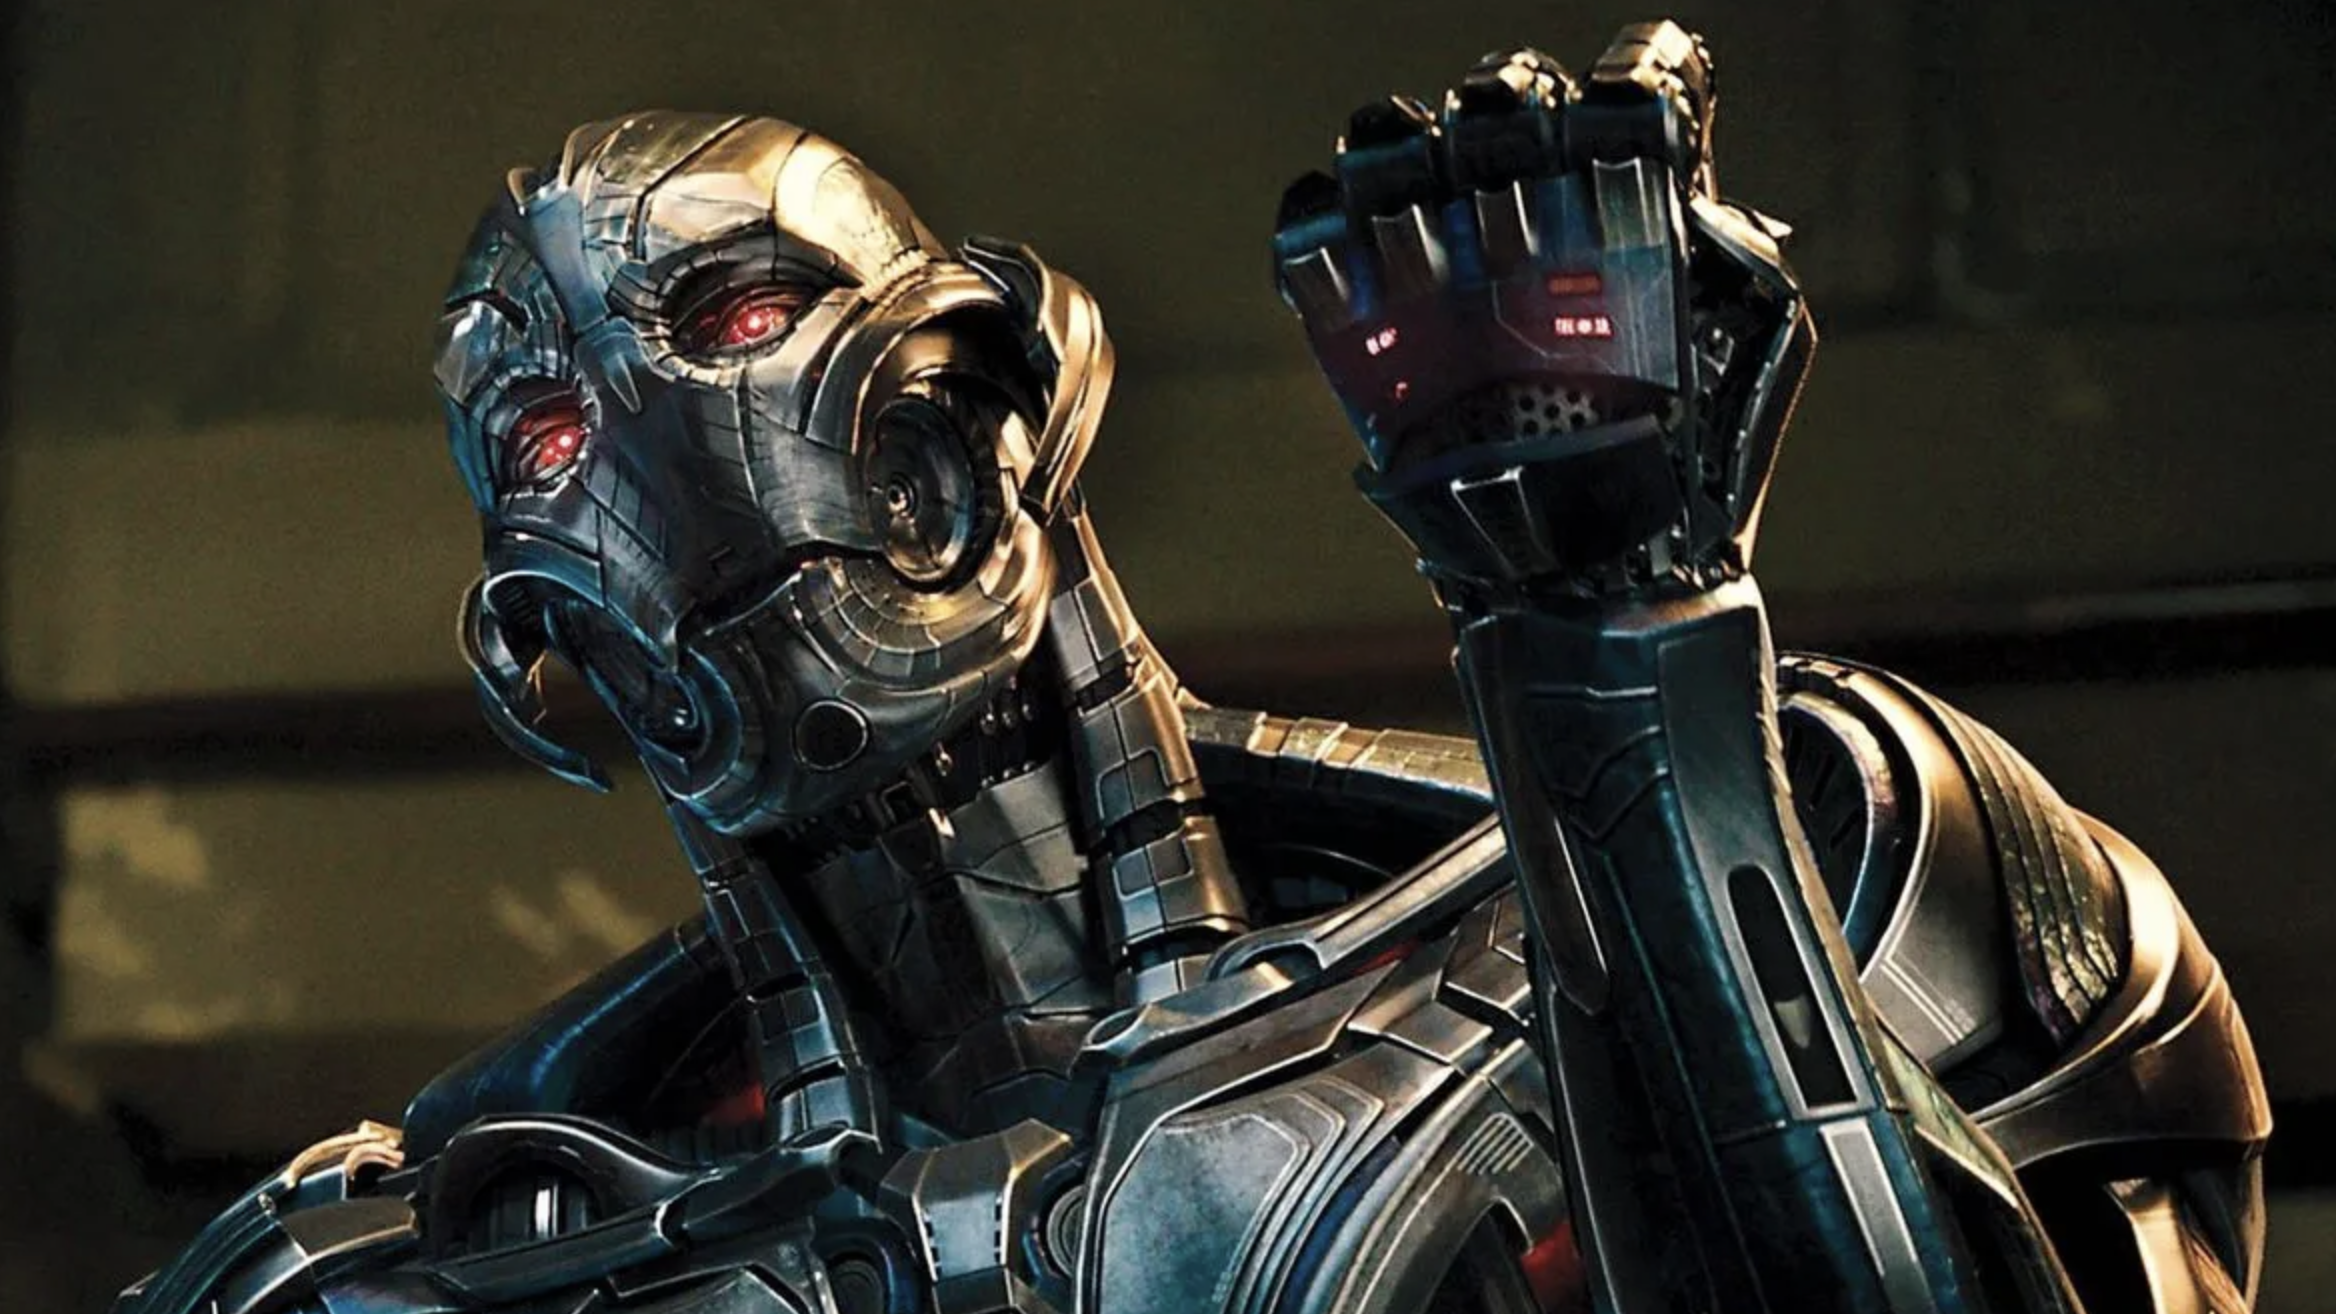 Fotografija Ultron-a, iz filma Avengers.